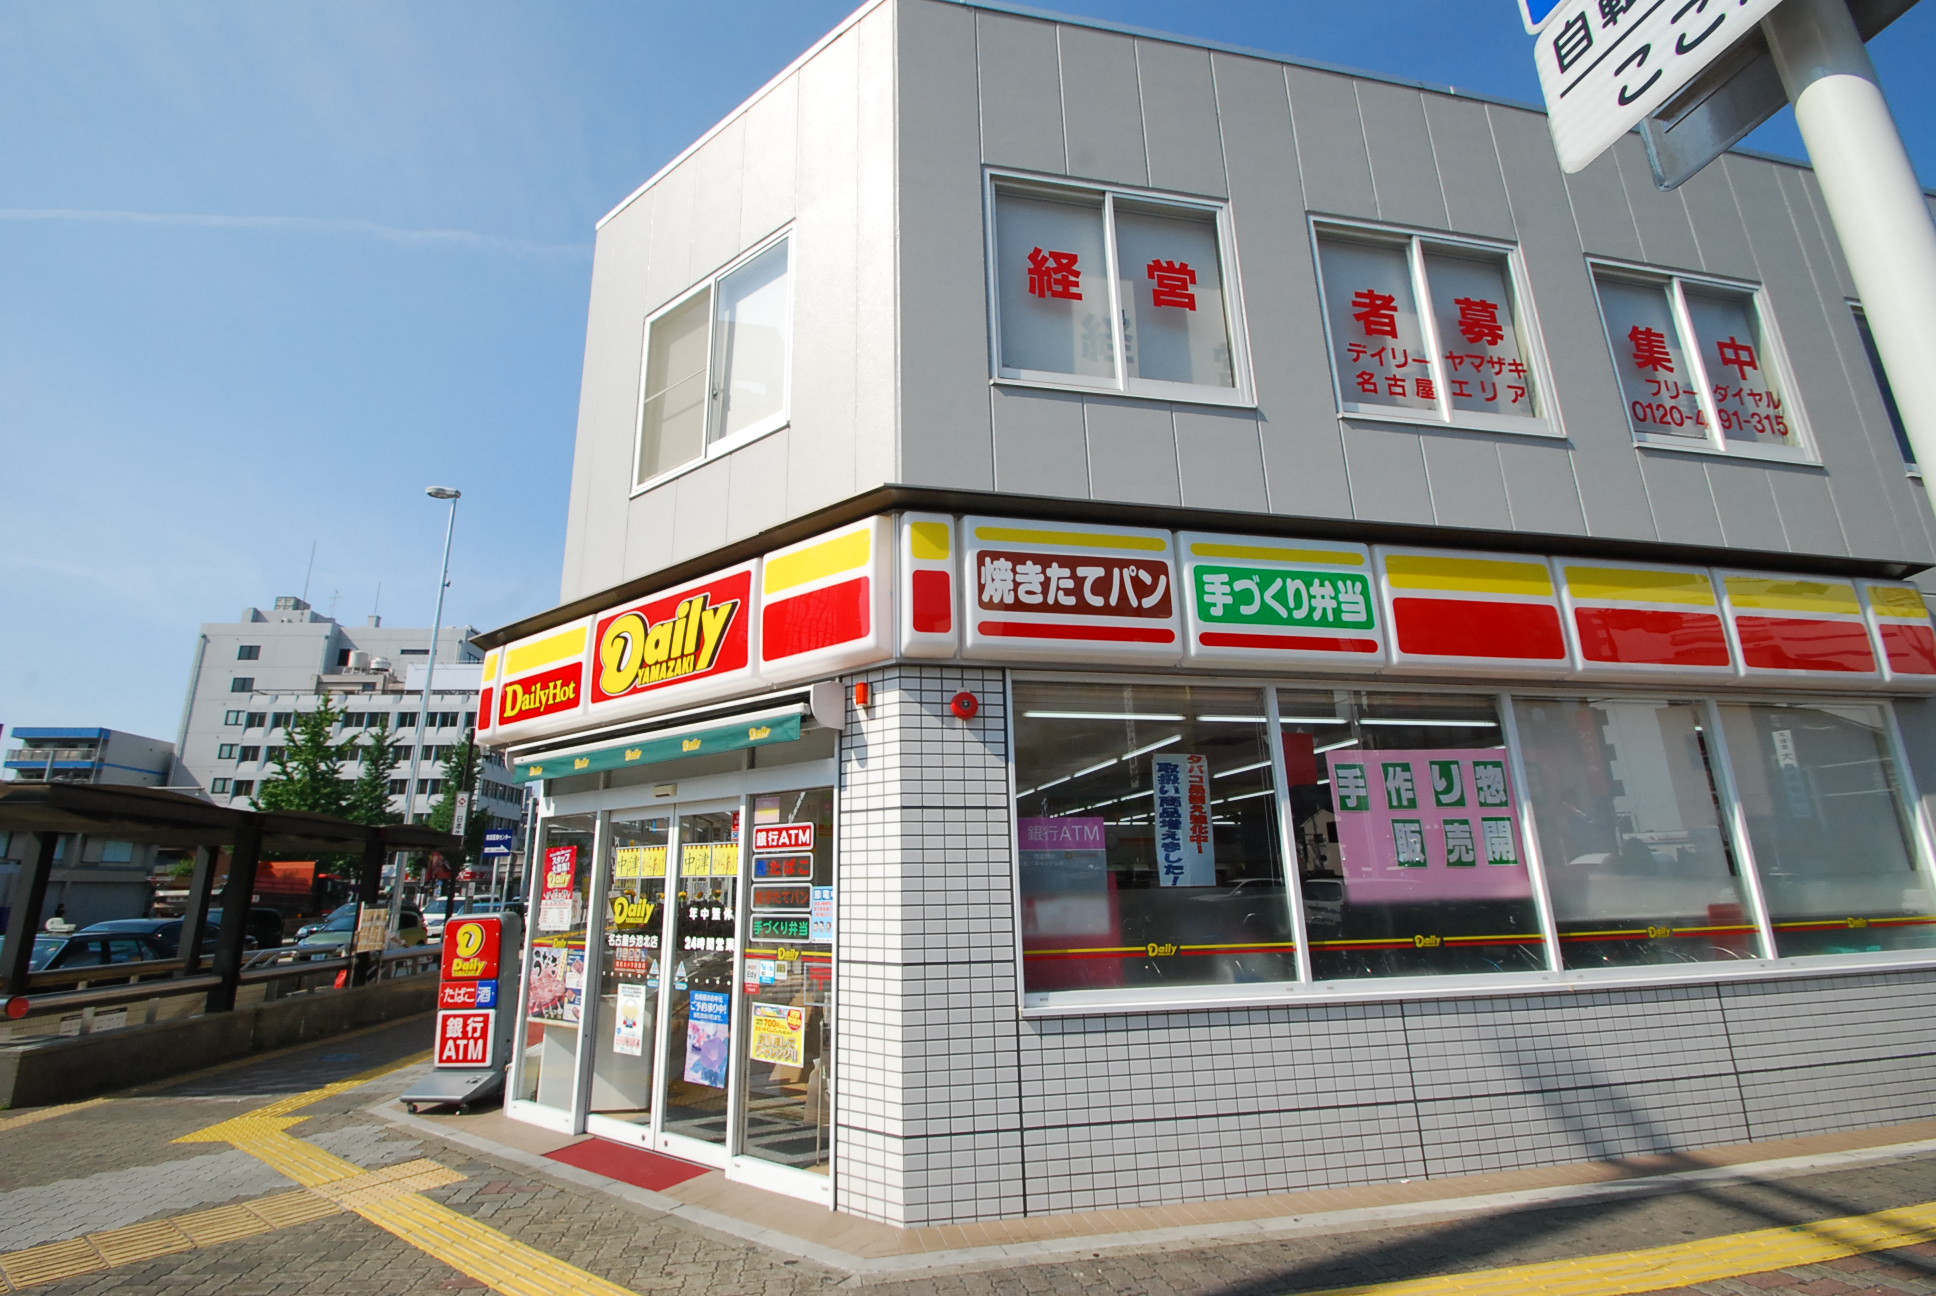 Convenience store. Daily Yamazaki 226m to Nagoya Imaike Kitamise (convenience store)